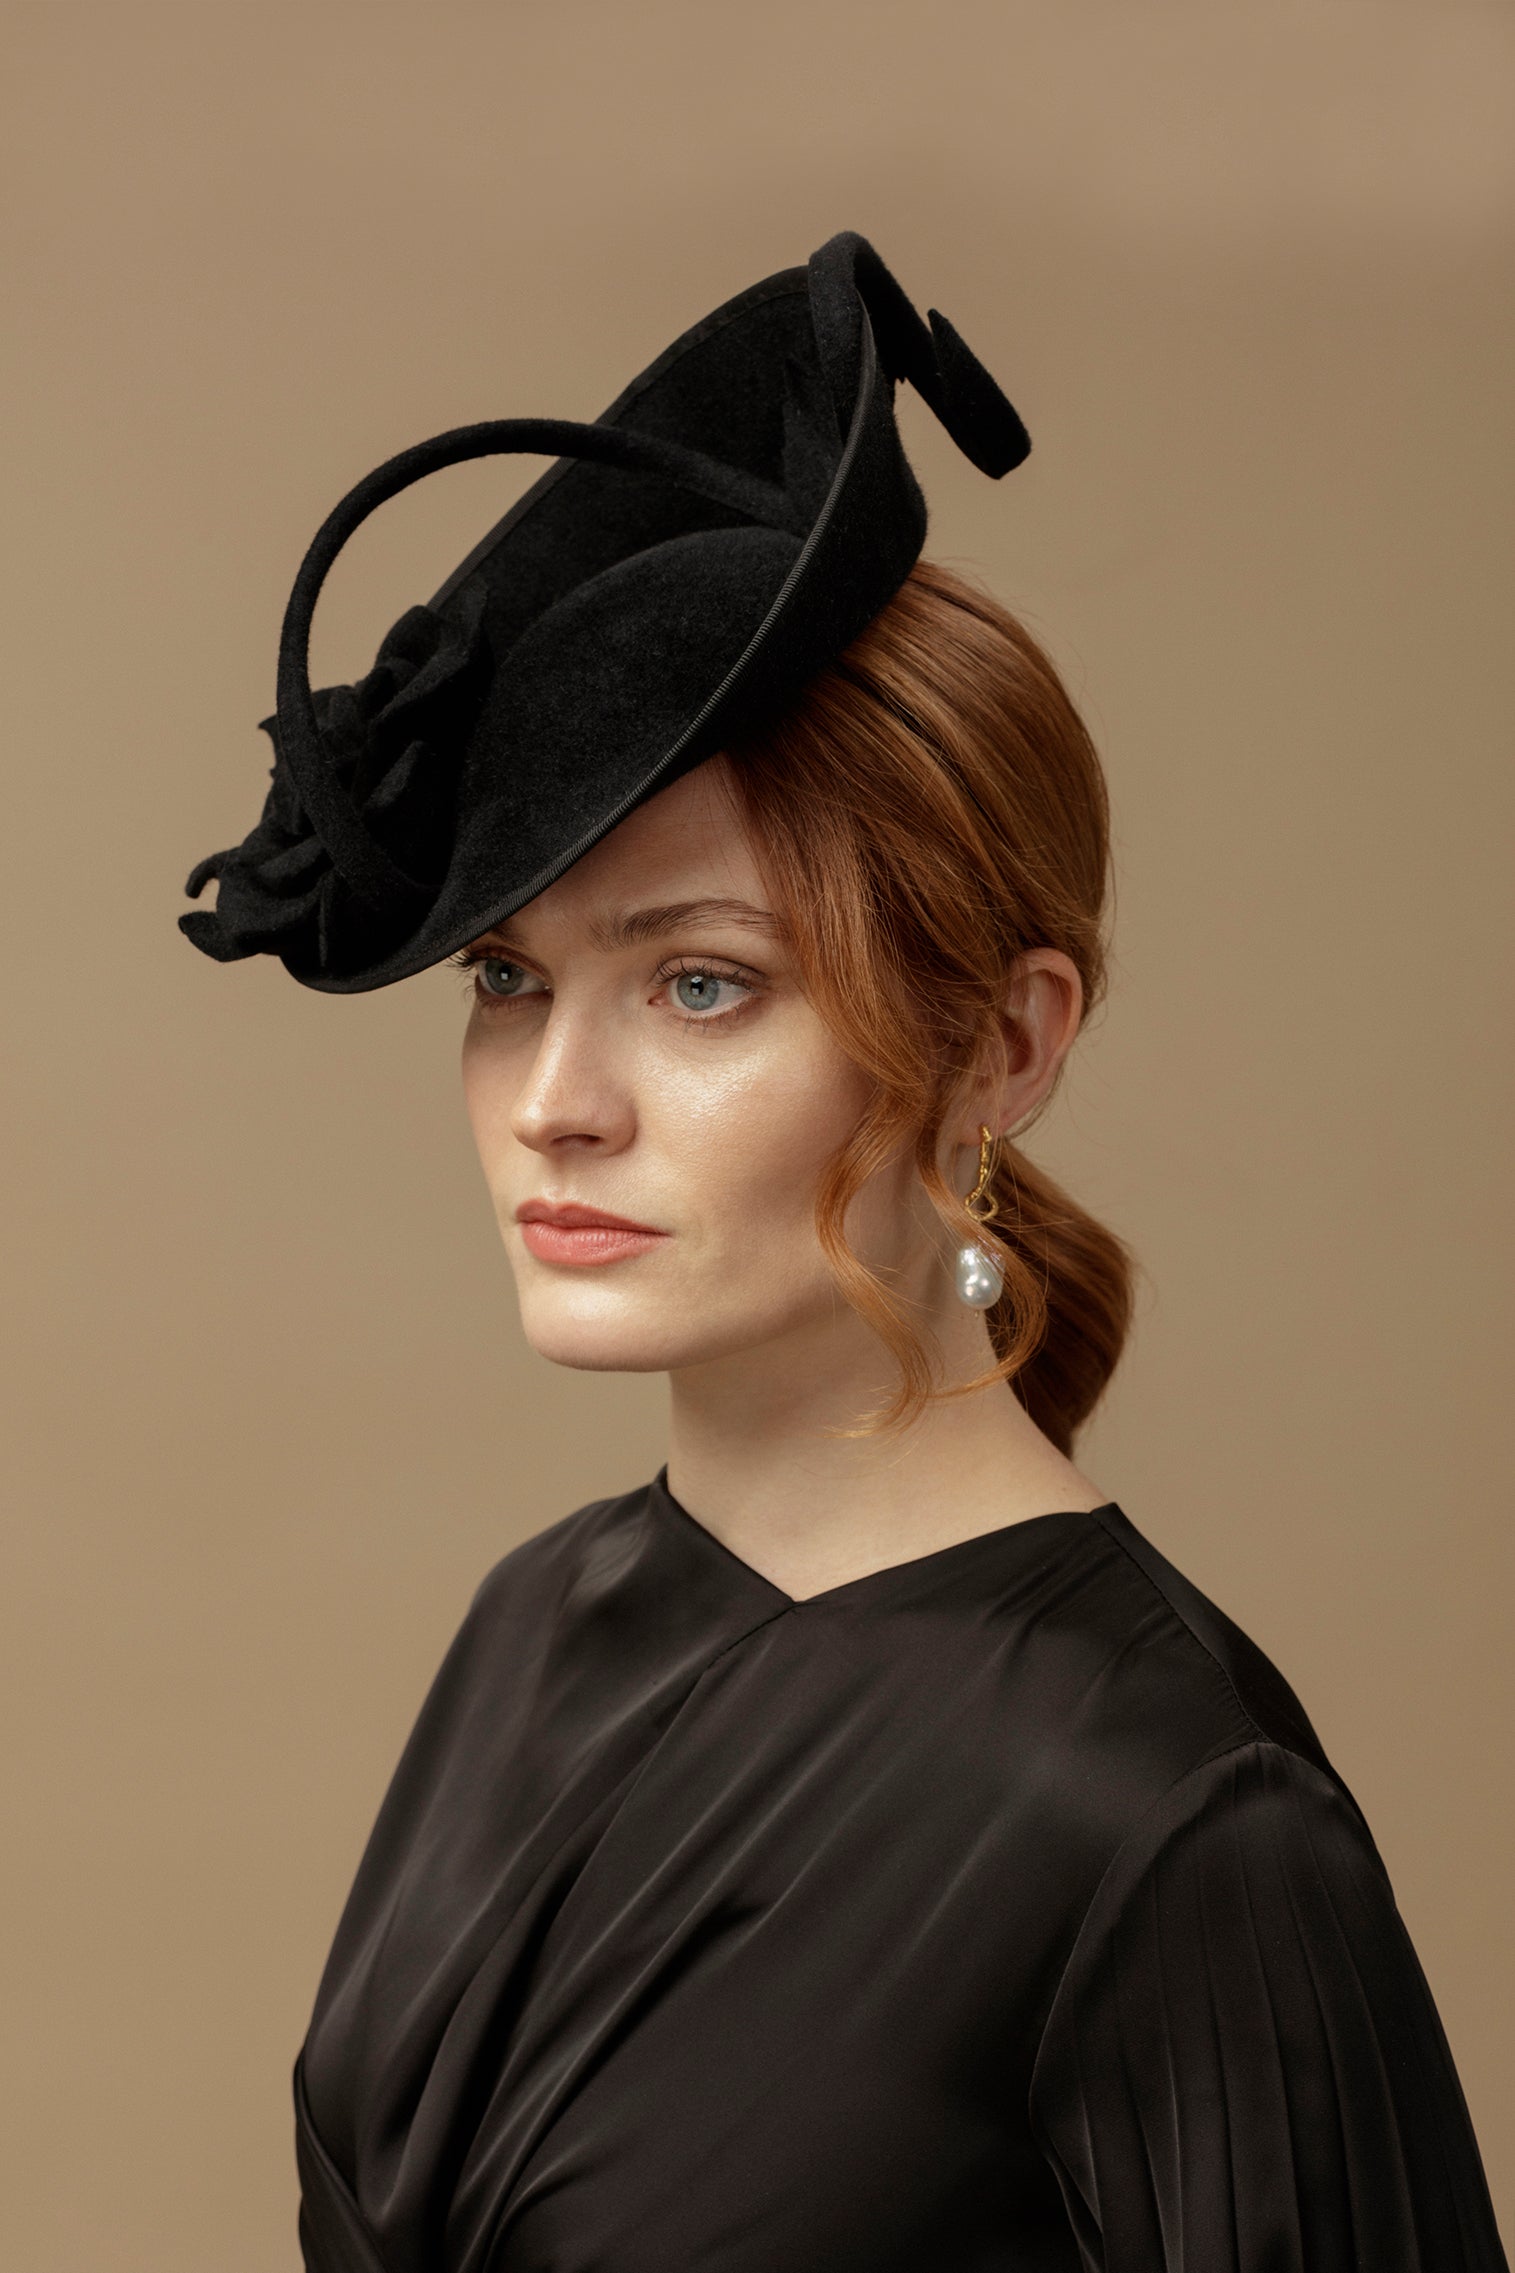 Black Belgravia Rose Hat - Products - Lock & Co. Hatters London UK